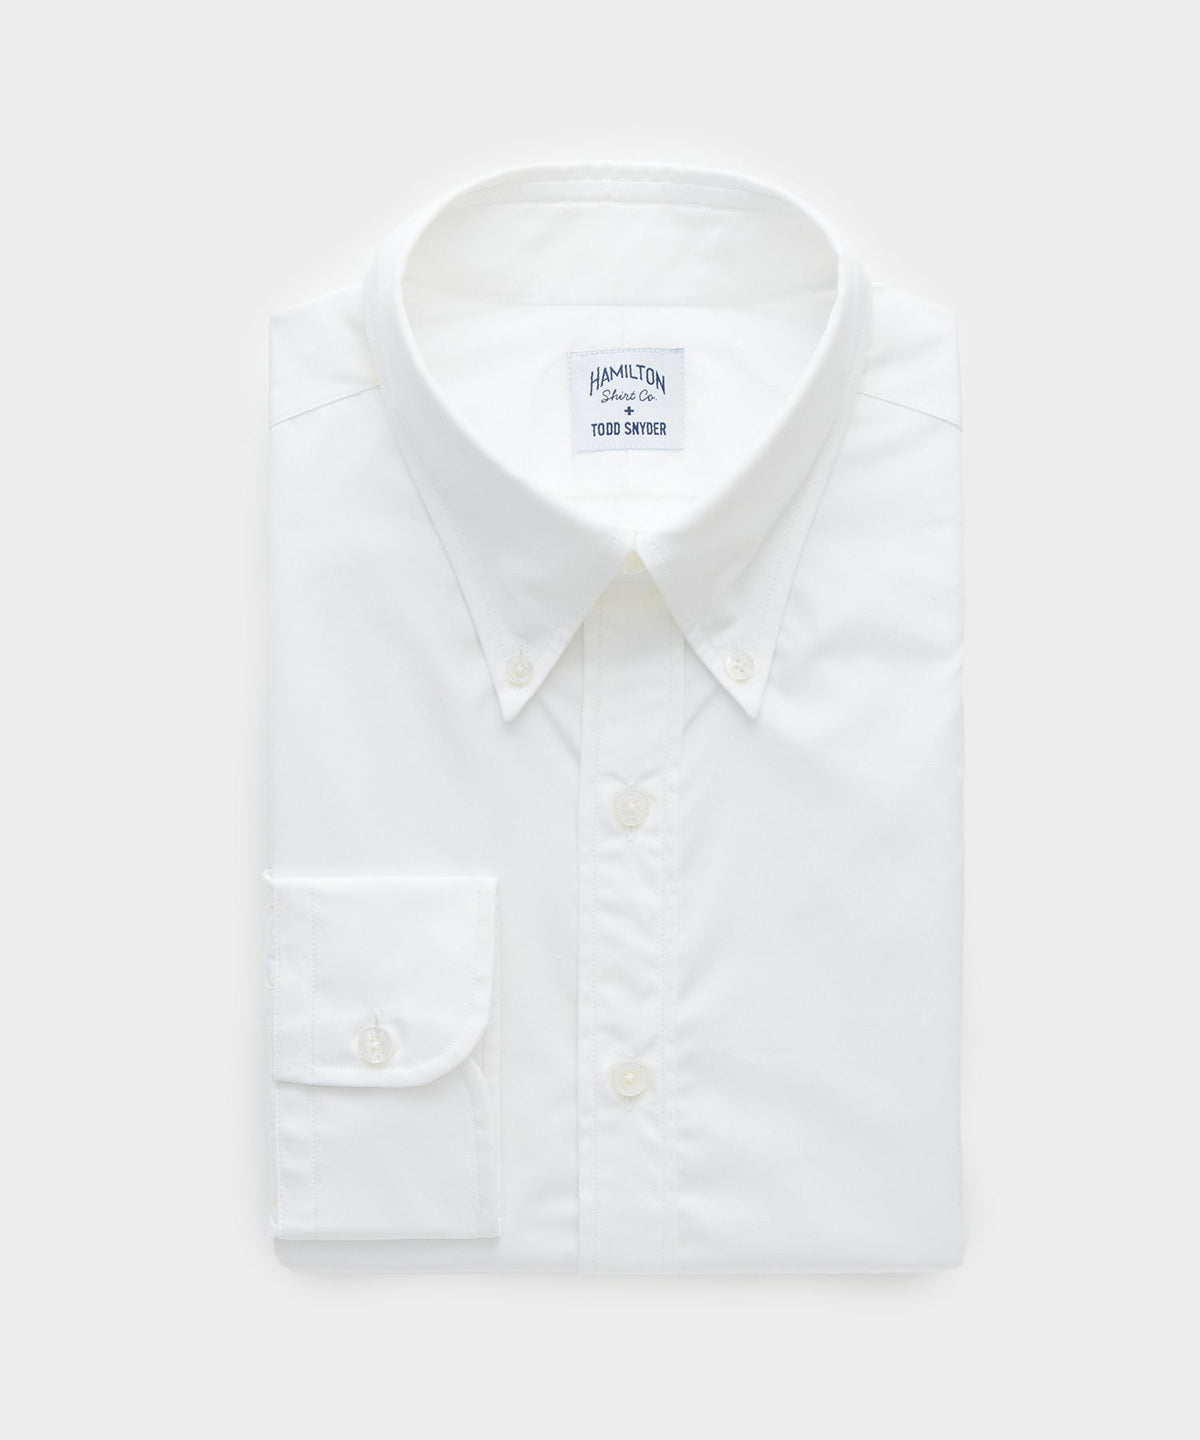 Todd Snyder X Hamilton Wrinkle Free Cotton Dress Shirt In White